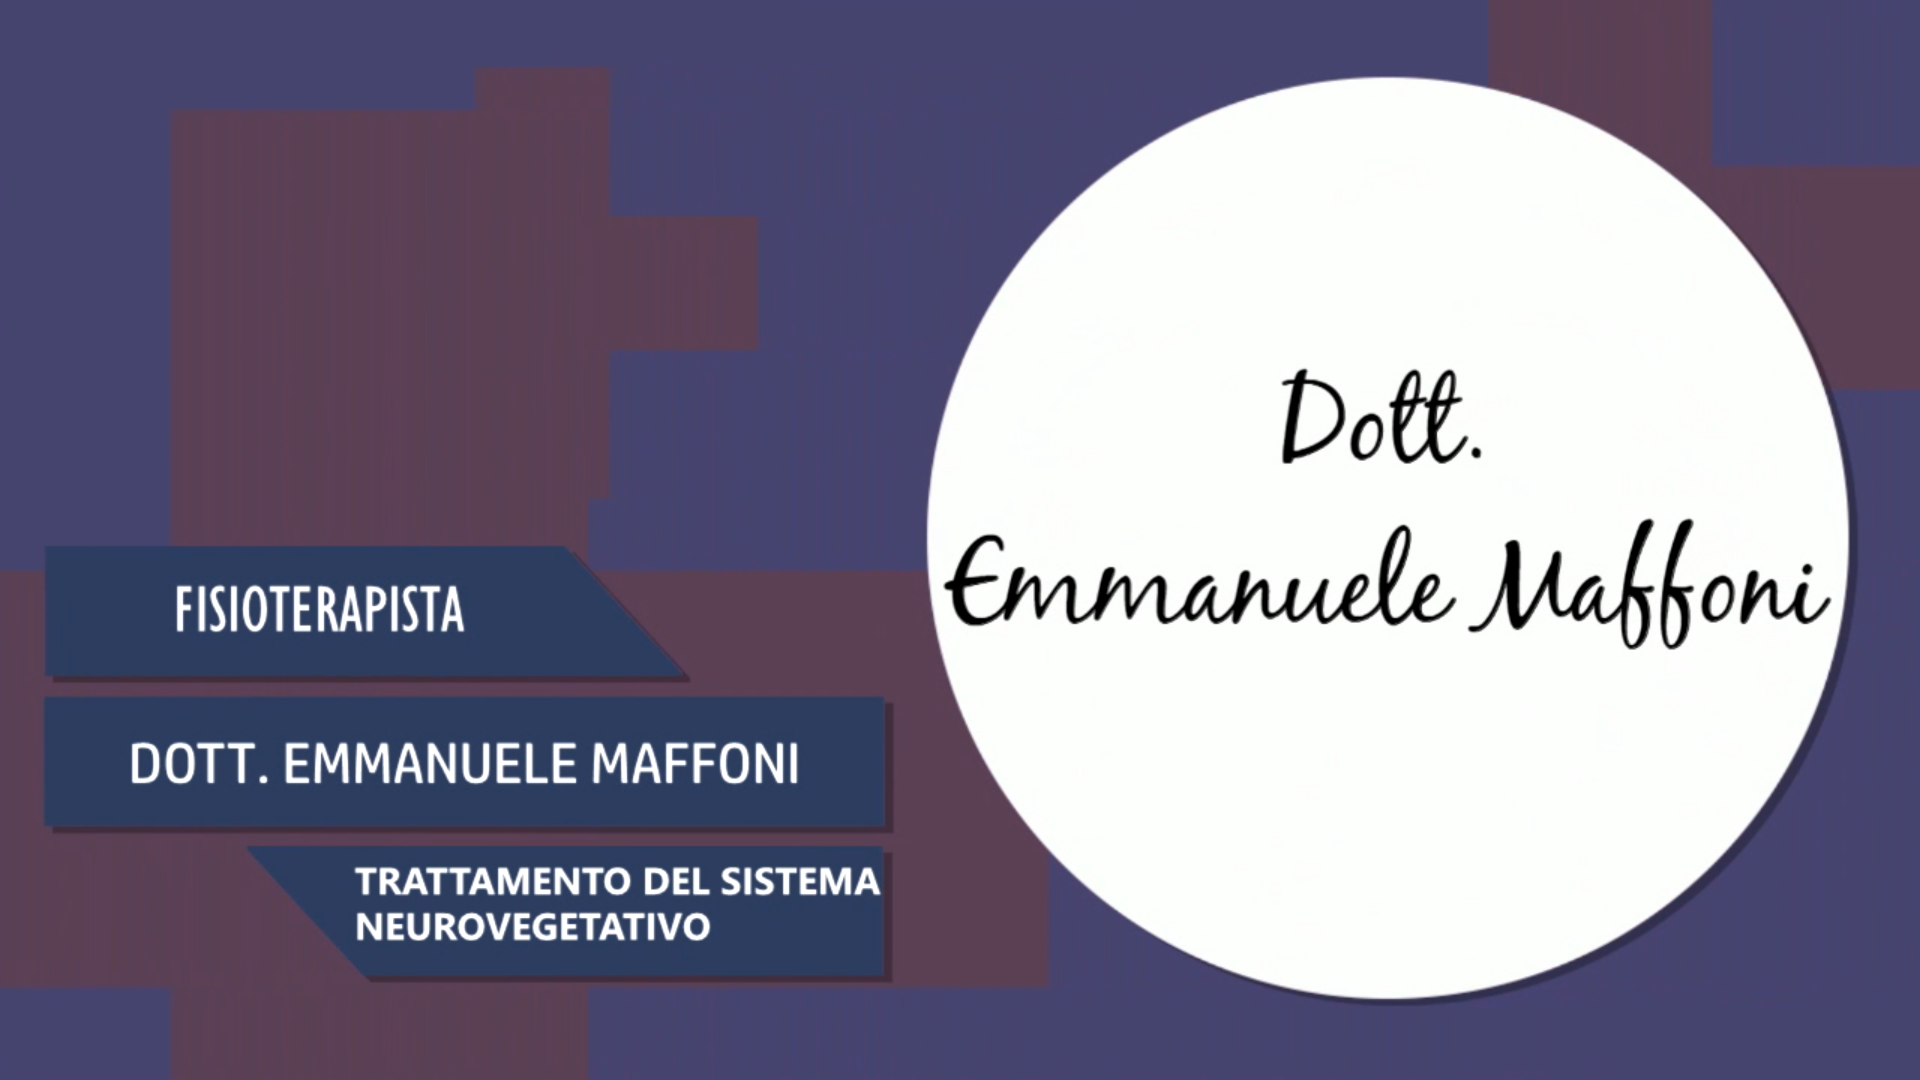 Dott. Emmanuele Maffoni – Trattamento del Sistema Neurovegetativo